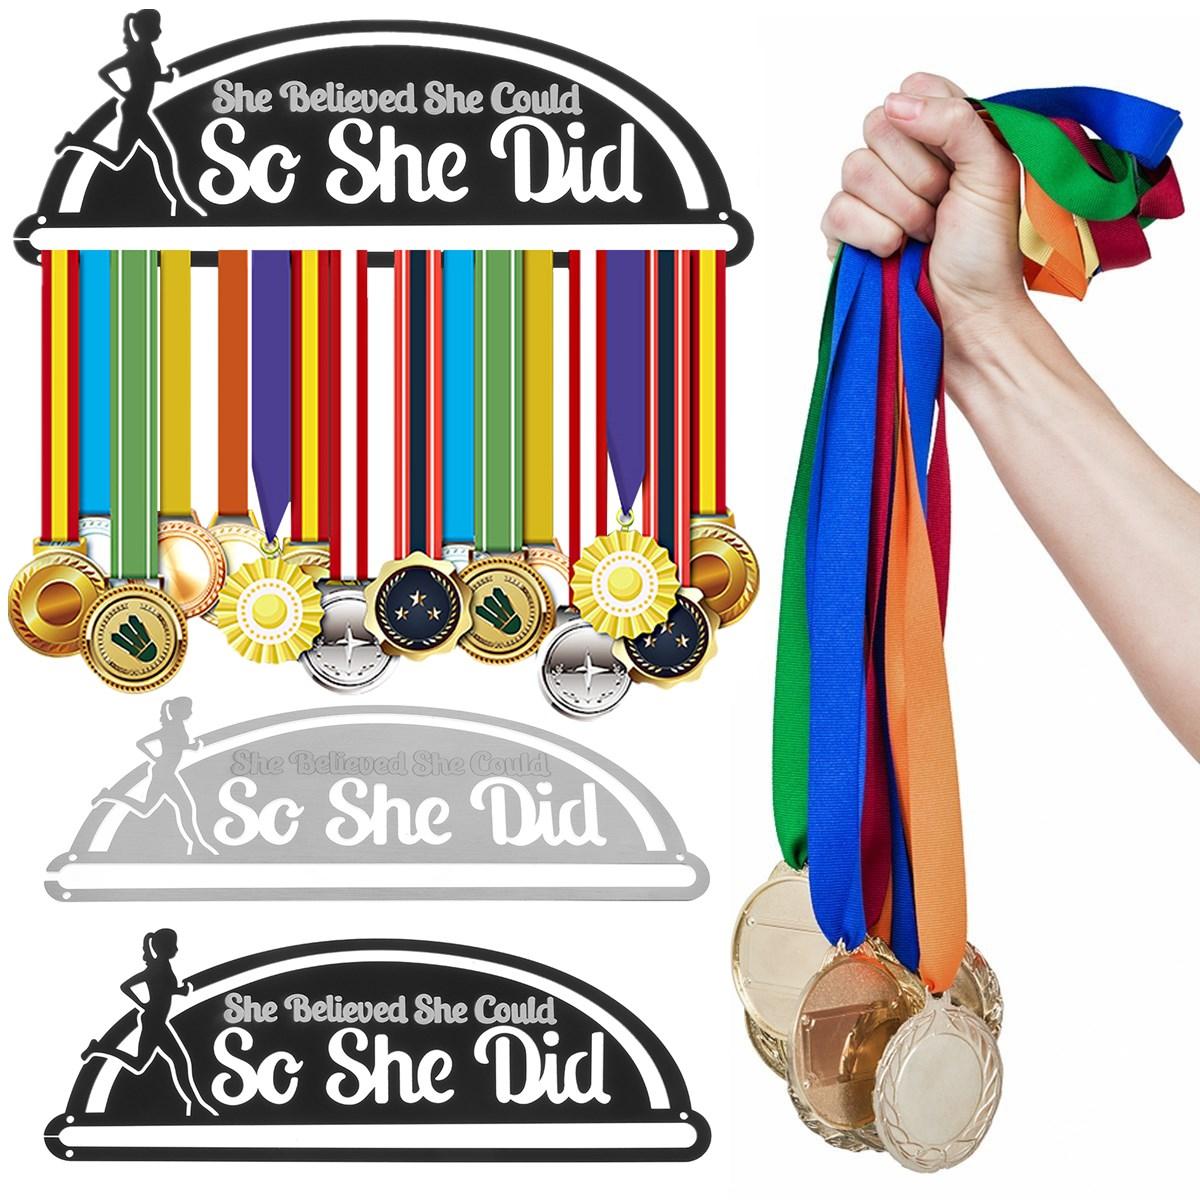 Edelstahl-Medaille Sporting Gym Running Holder Hanger Awards Display Rack Dekorationen